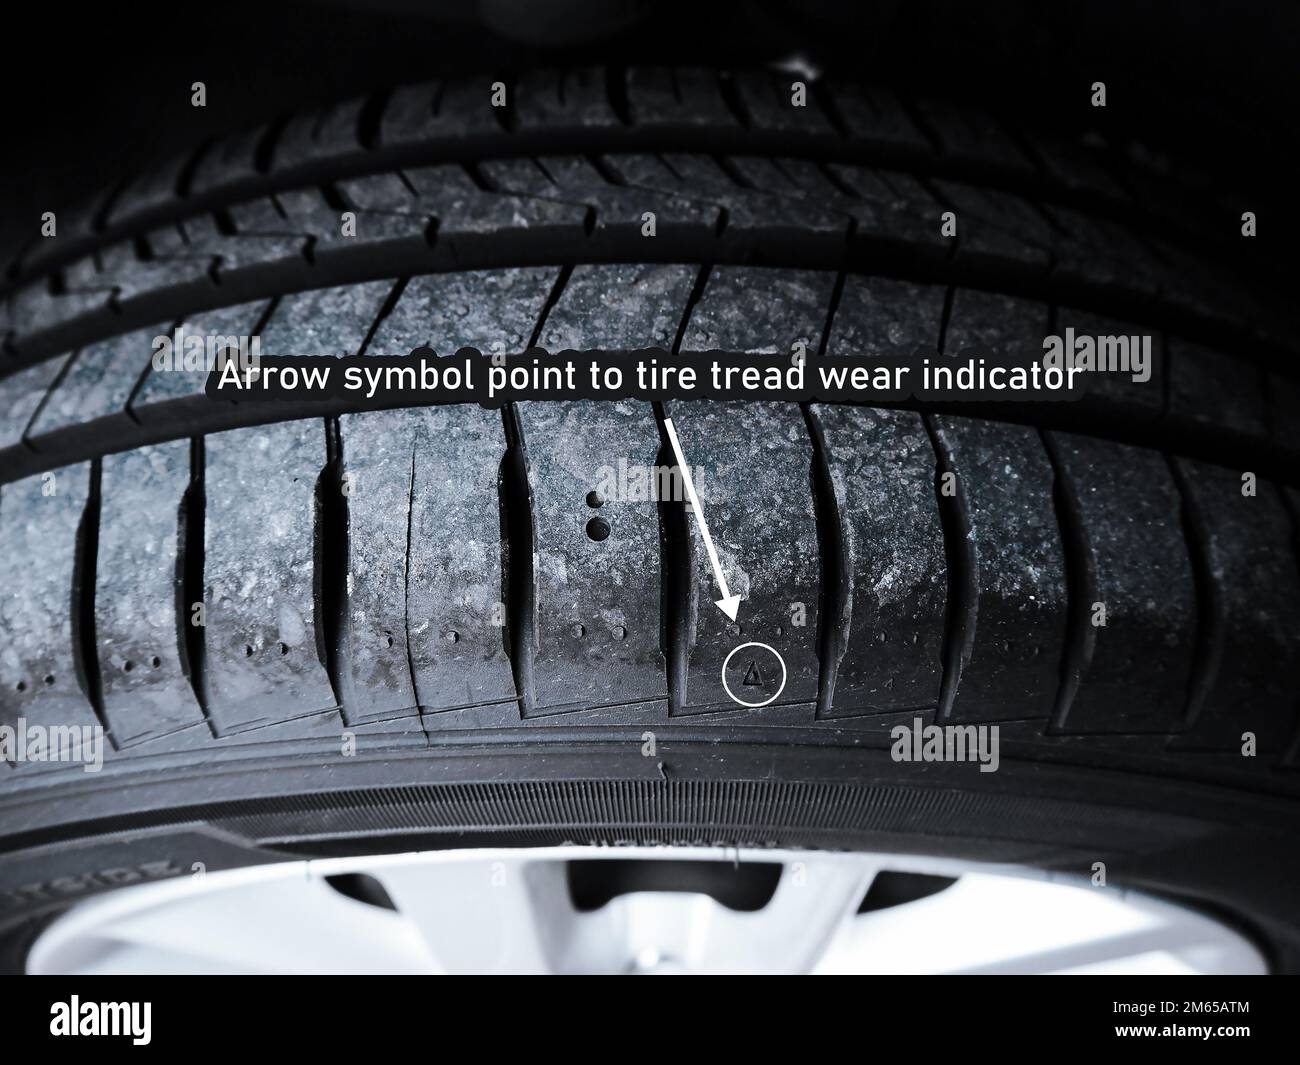 The arrow symbol point to tire tread wear indicator of car tire Stock Photo